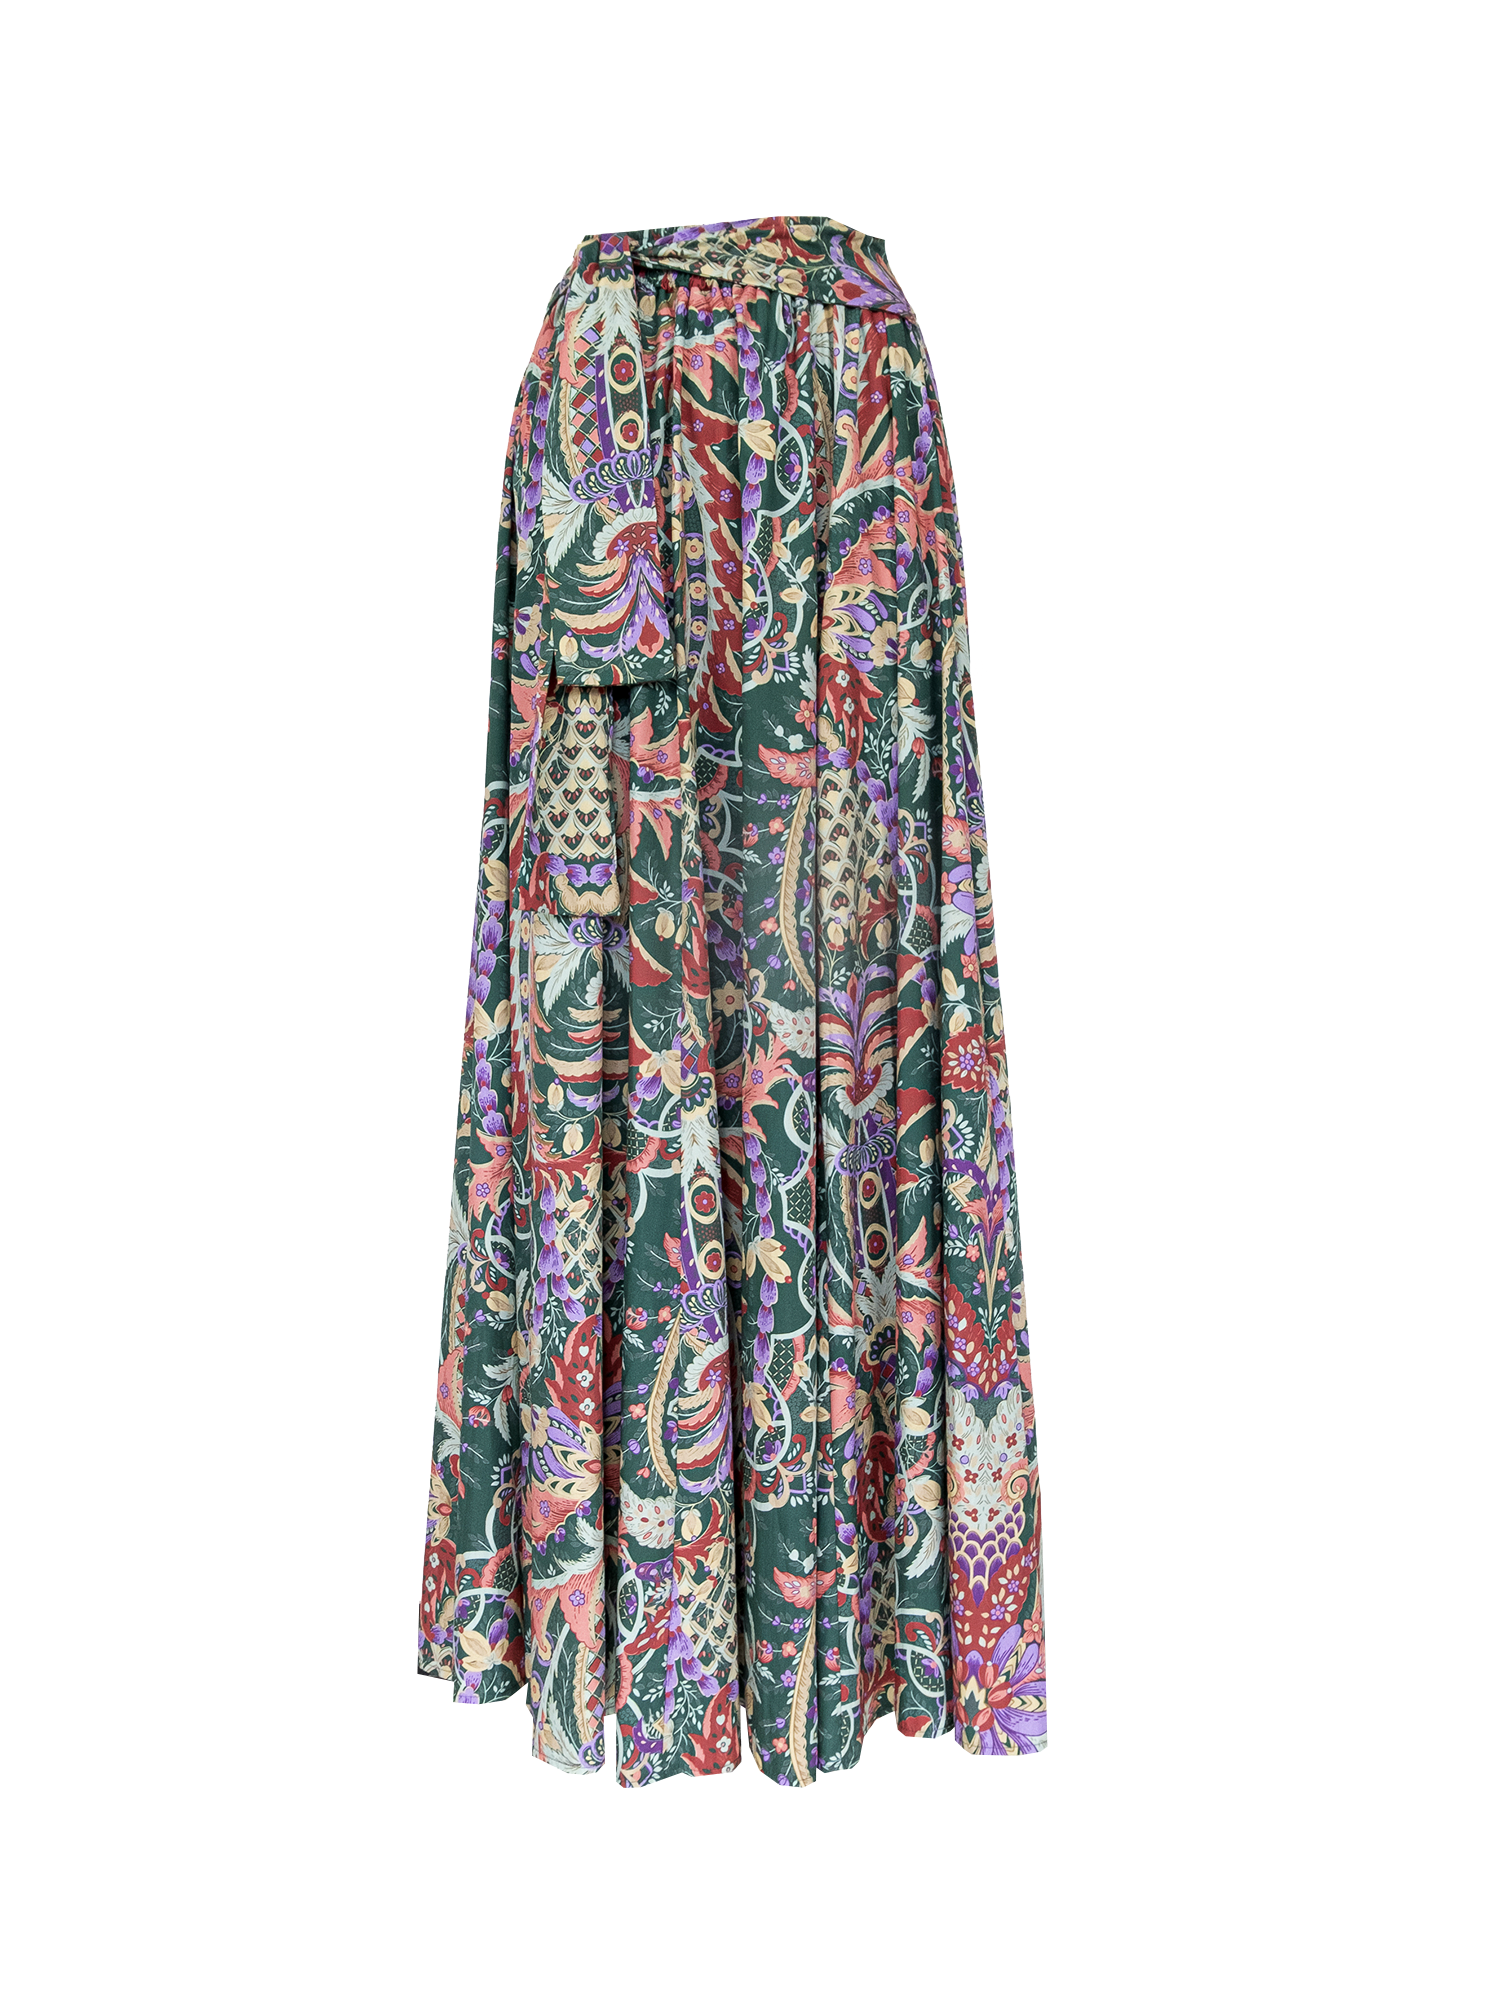 FIORDALISA - long cotton skirt in Pergola pattern